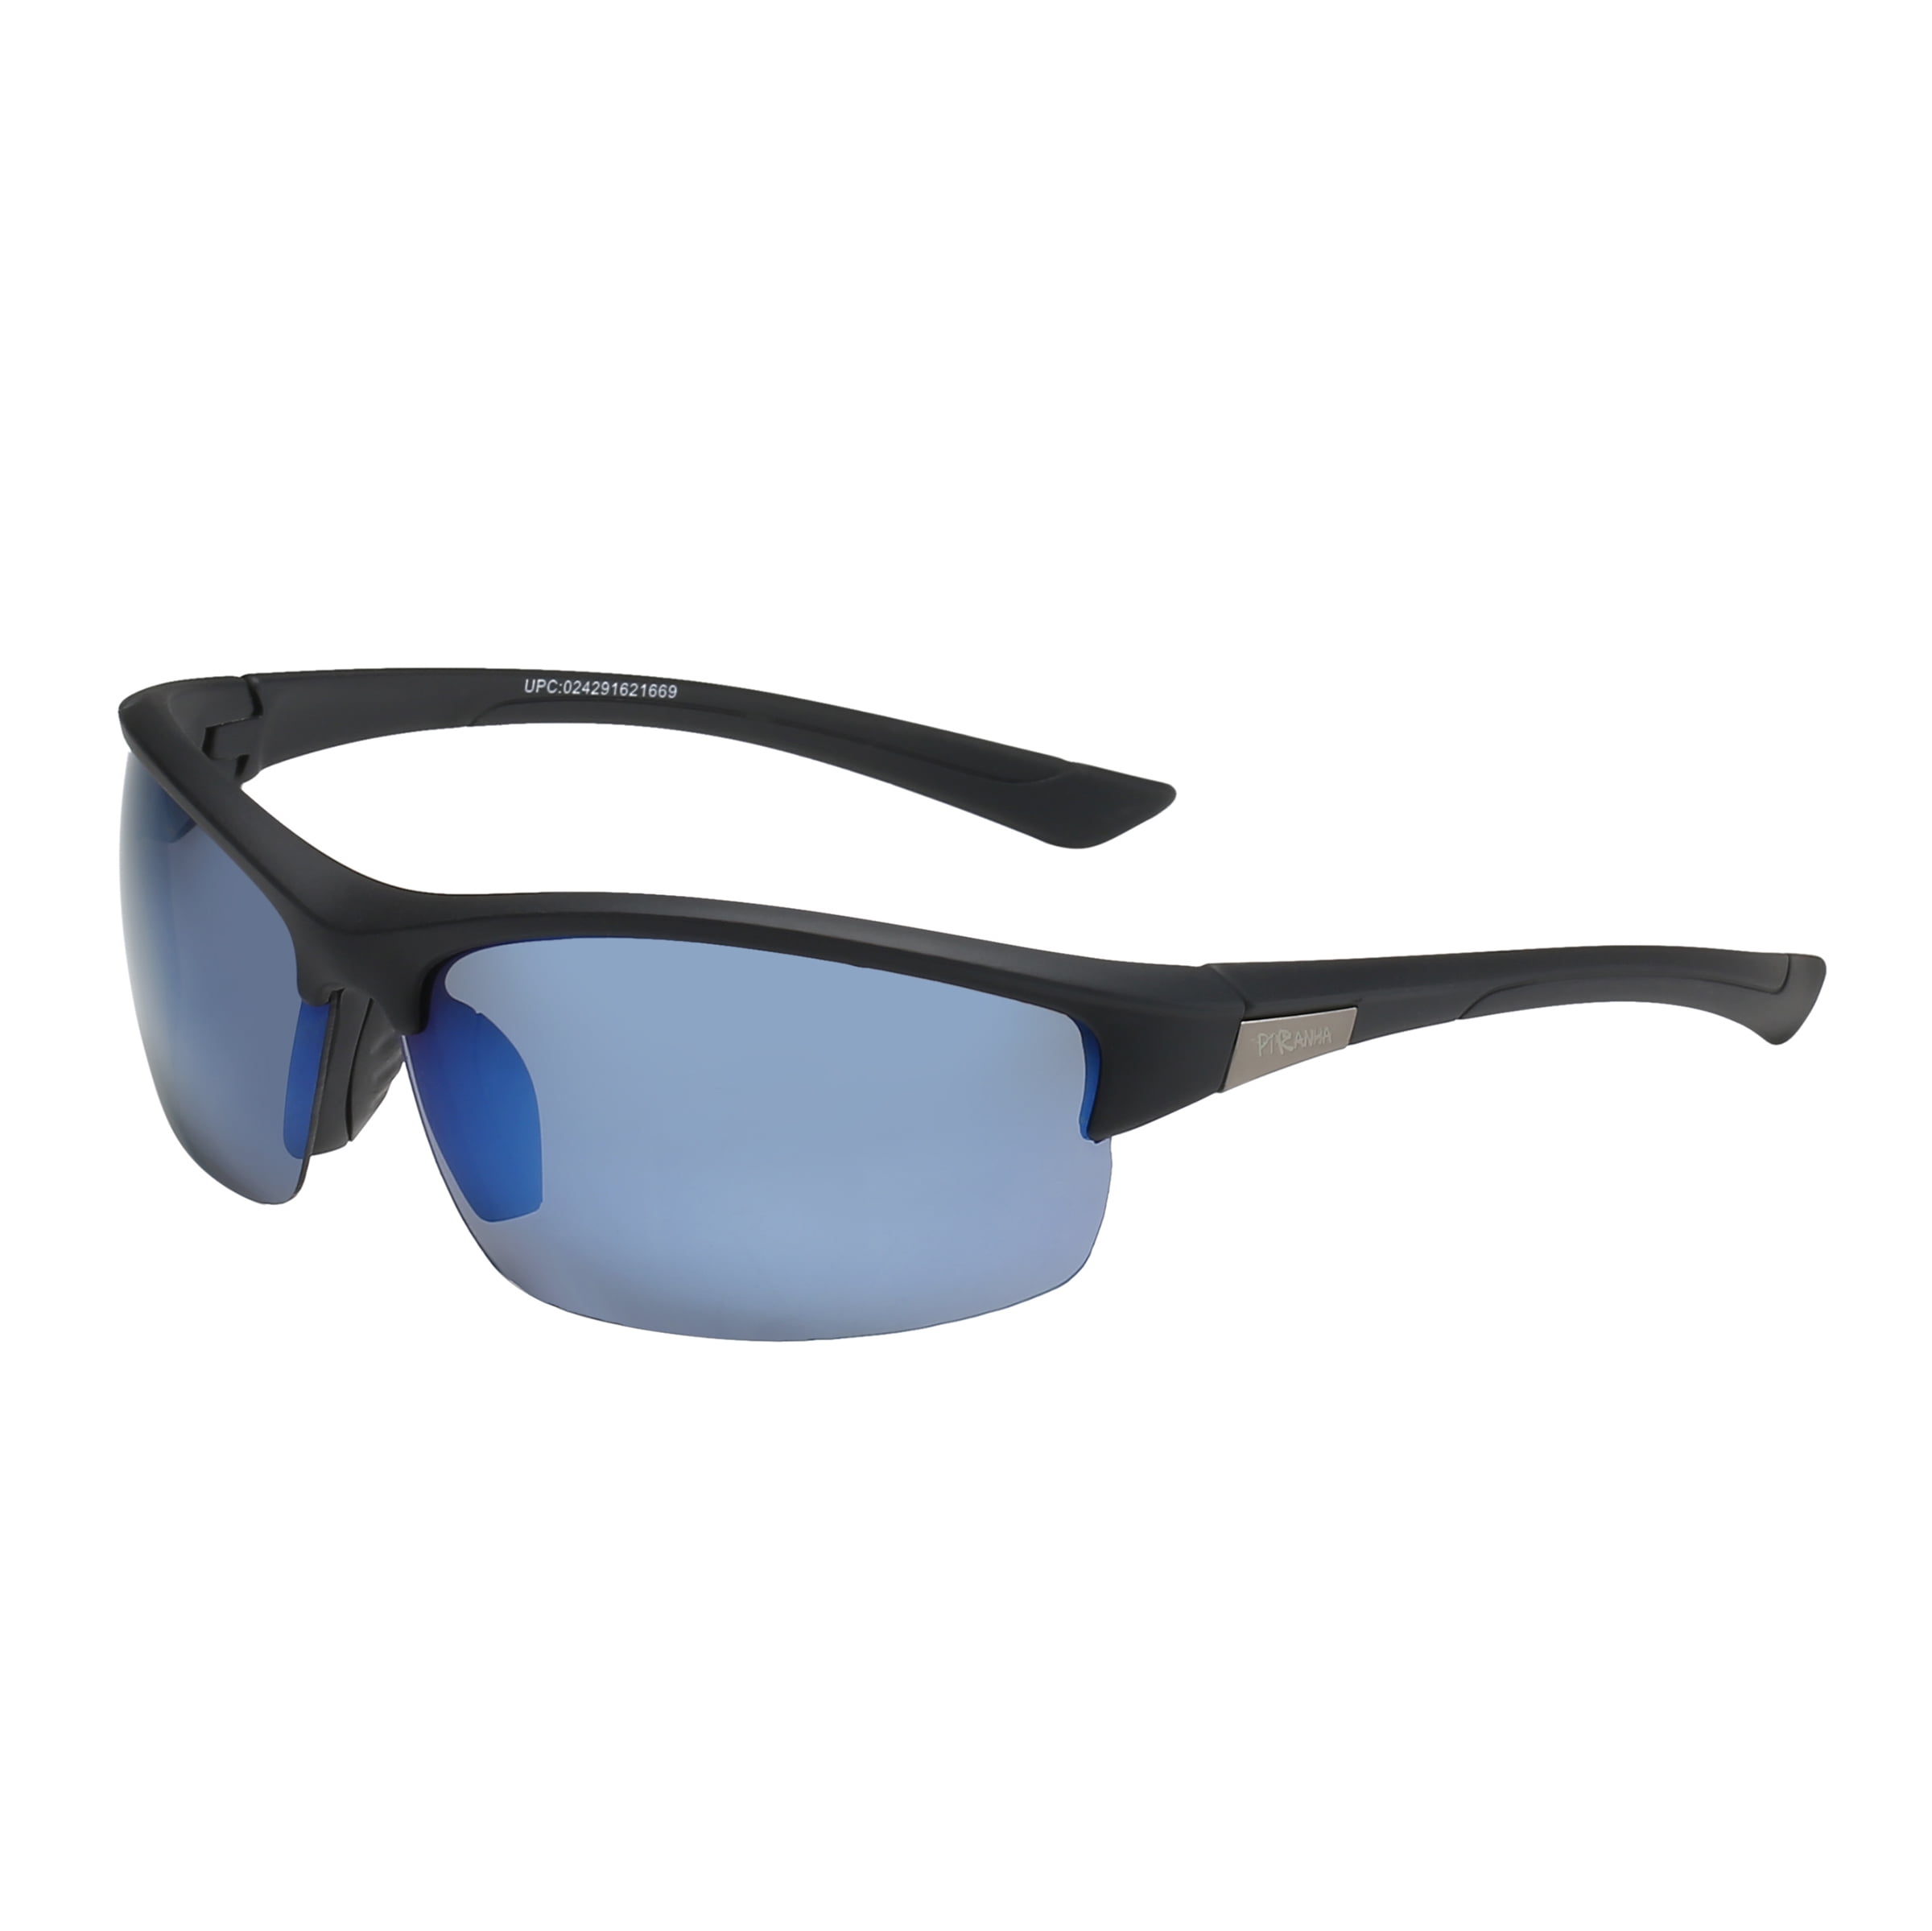 Piranha Eyewear Academy Half Frame Polarized Sport Sunglasses with